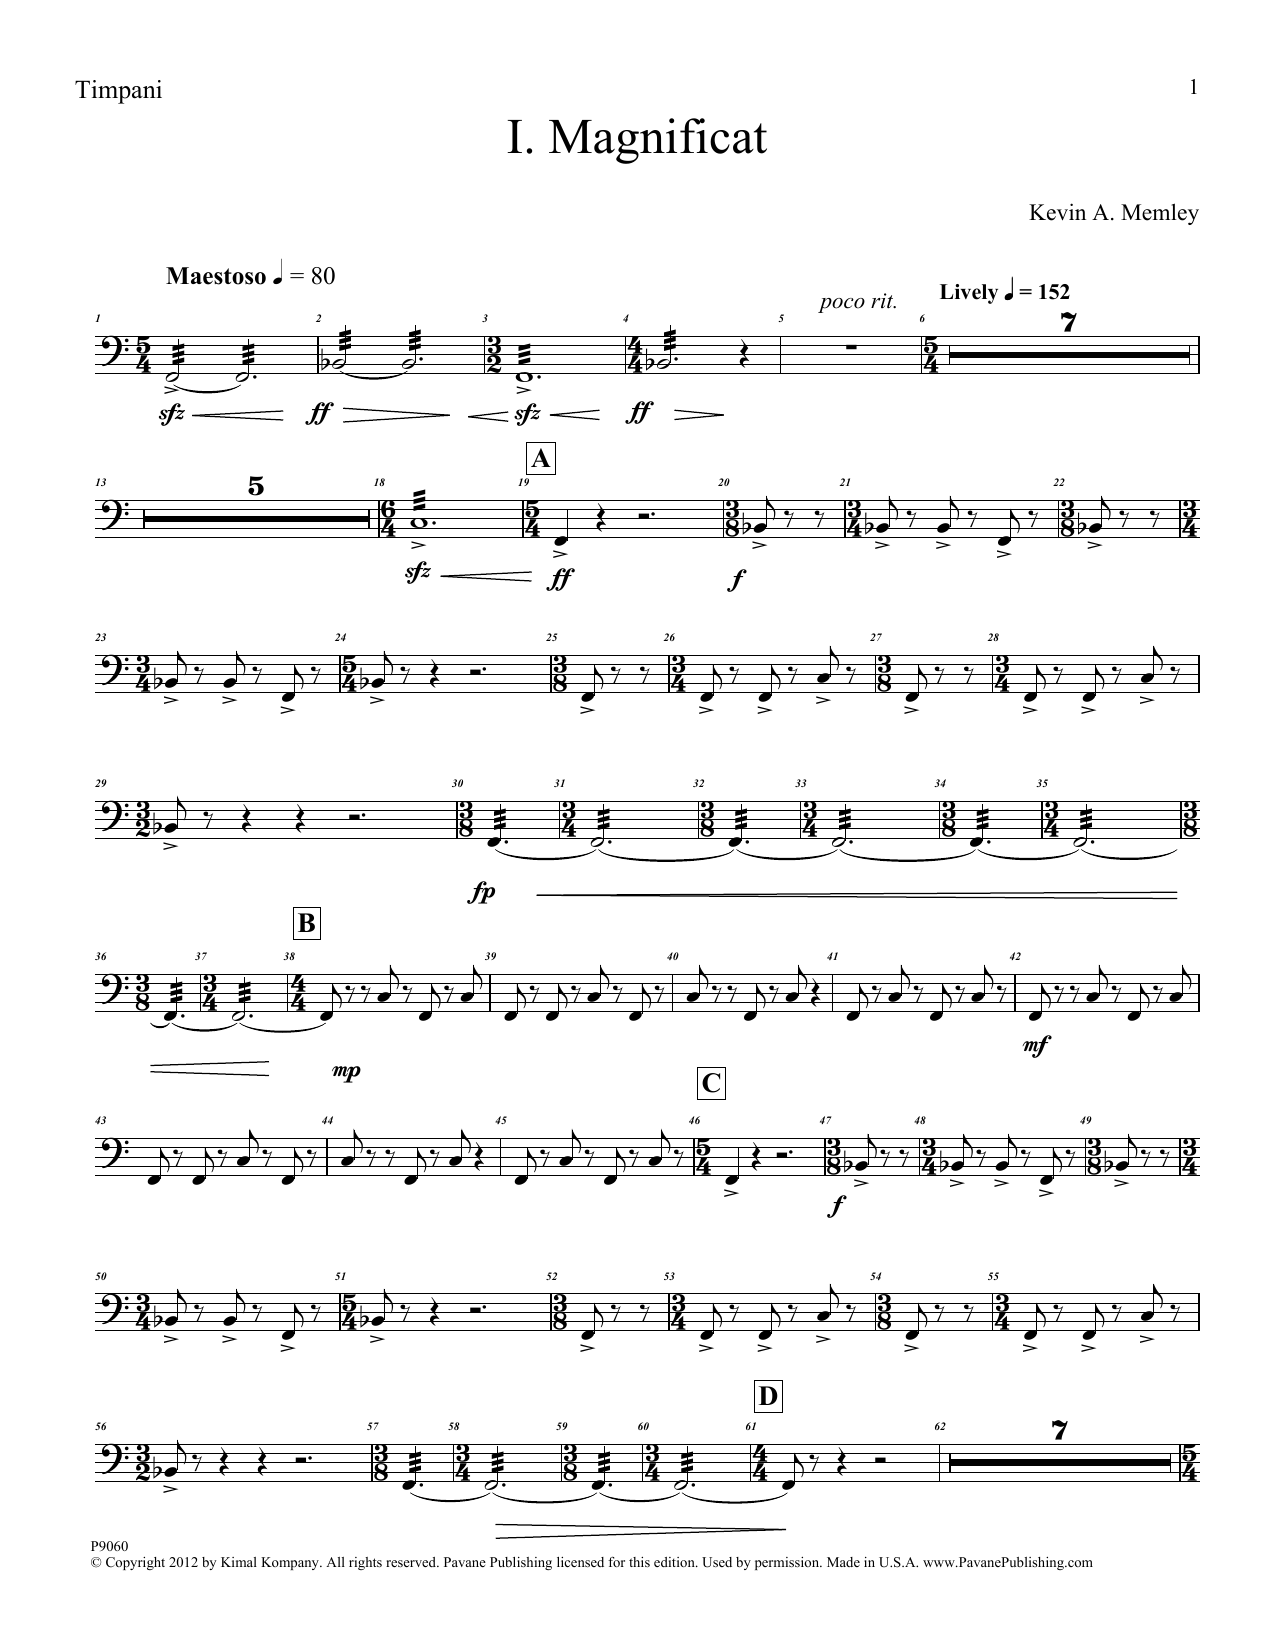 Kevin Memley Magnificat (Brass Quintet) (Parts) - Timpani Sheet Music Notes & Chords for Choir Instrumental Pak - Download or Print PDF